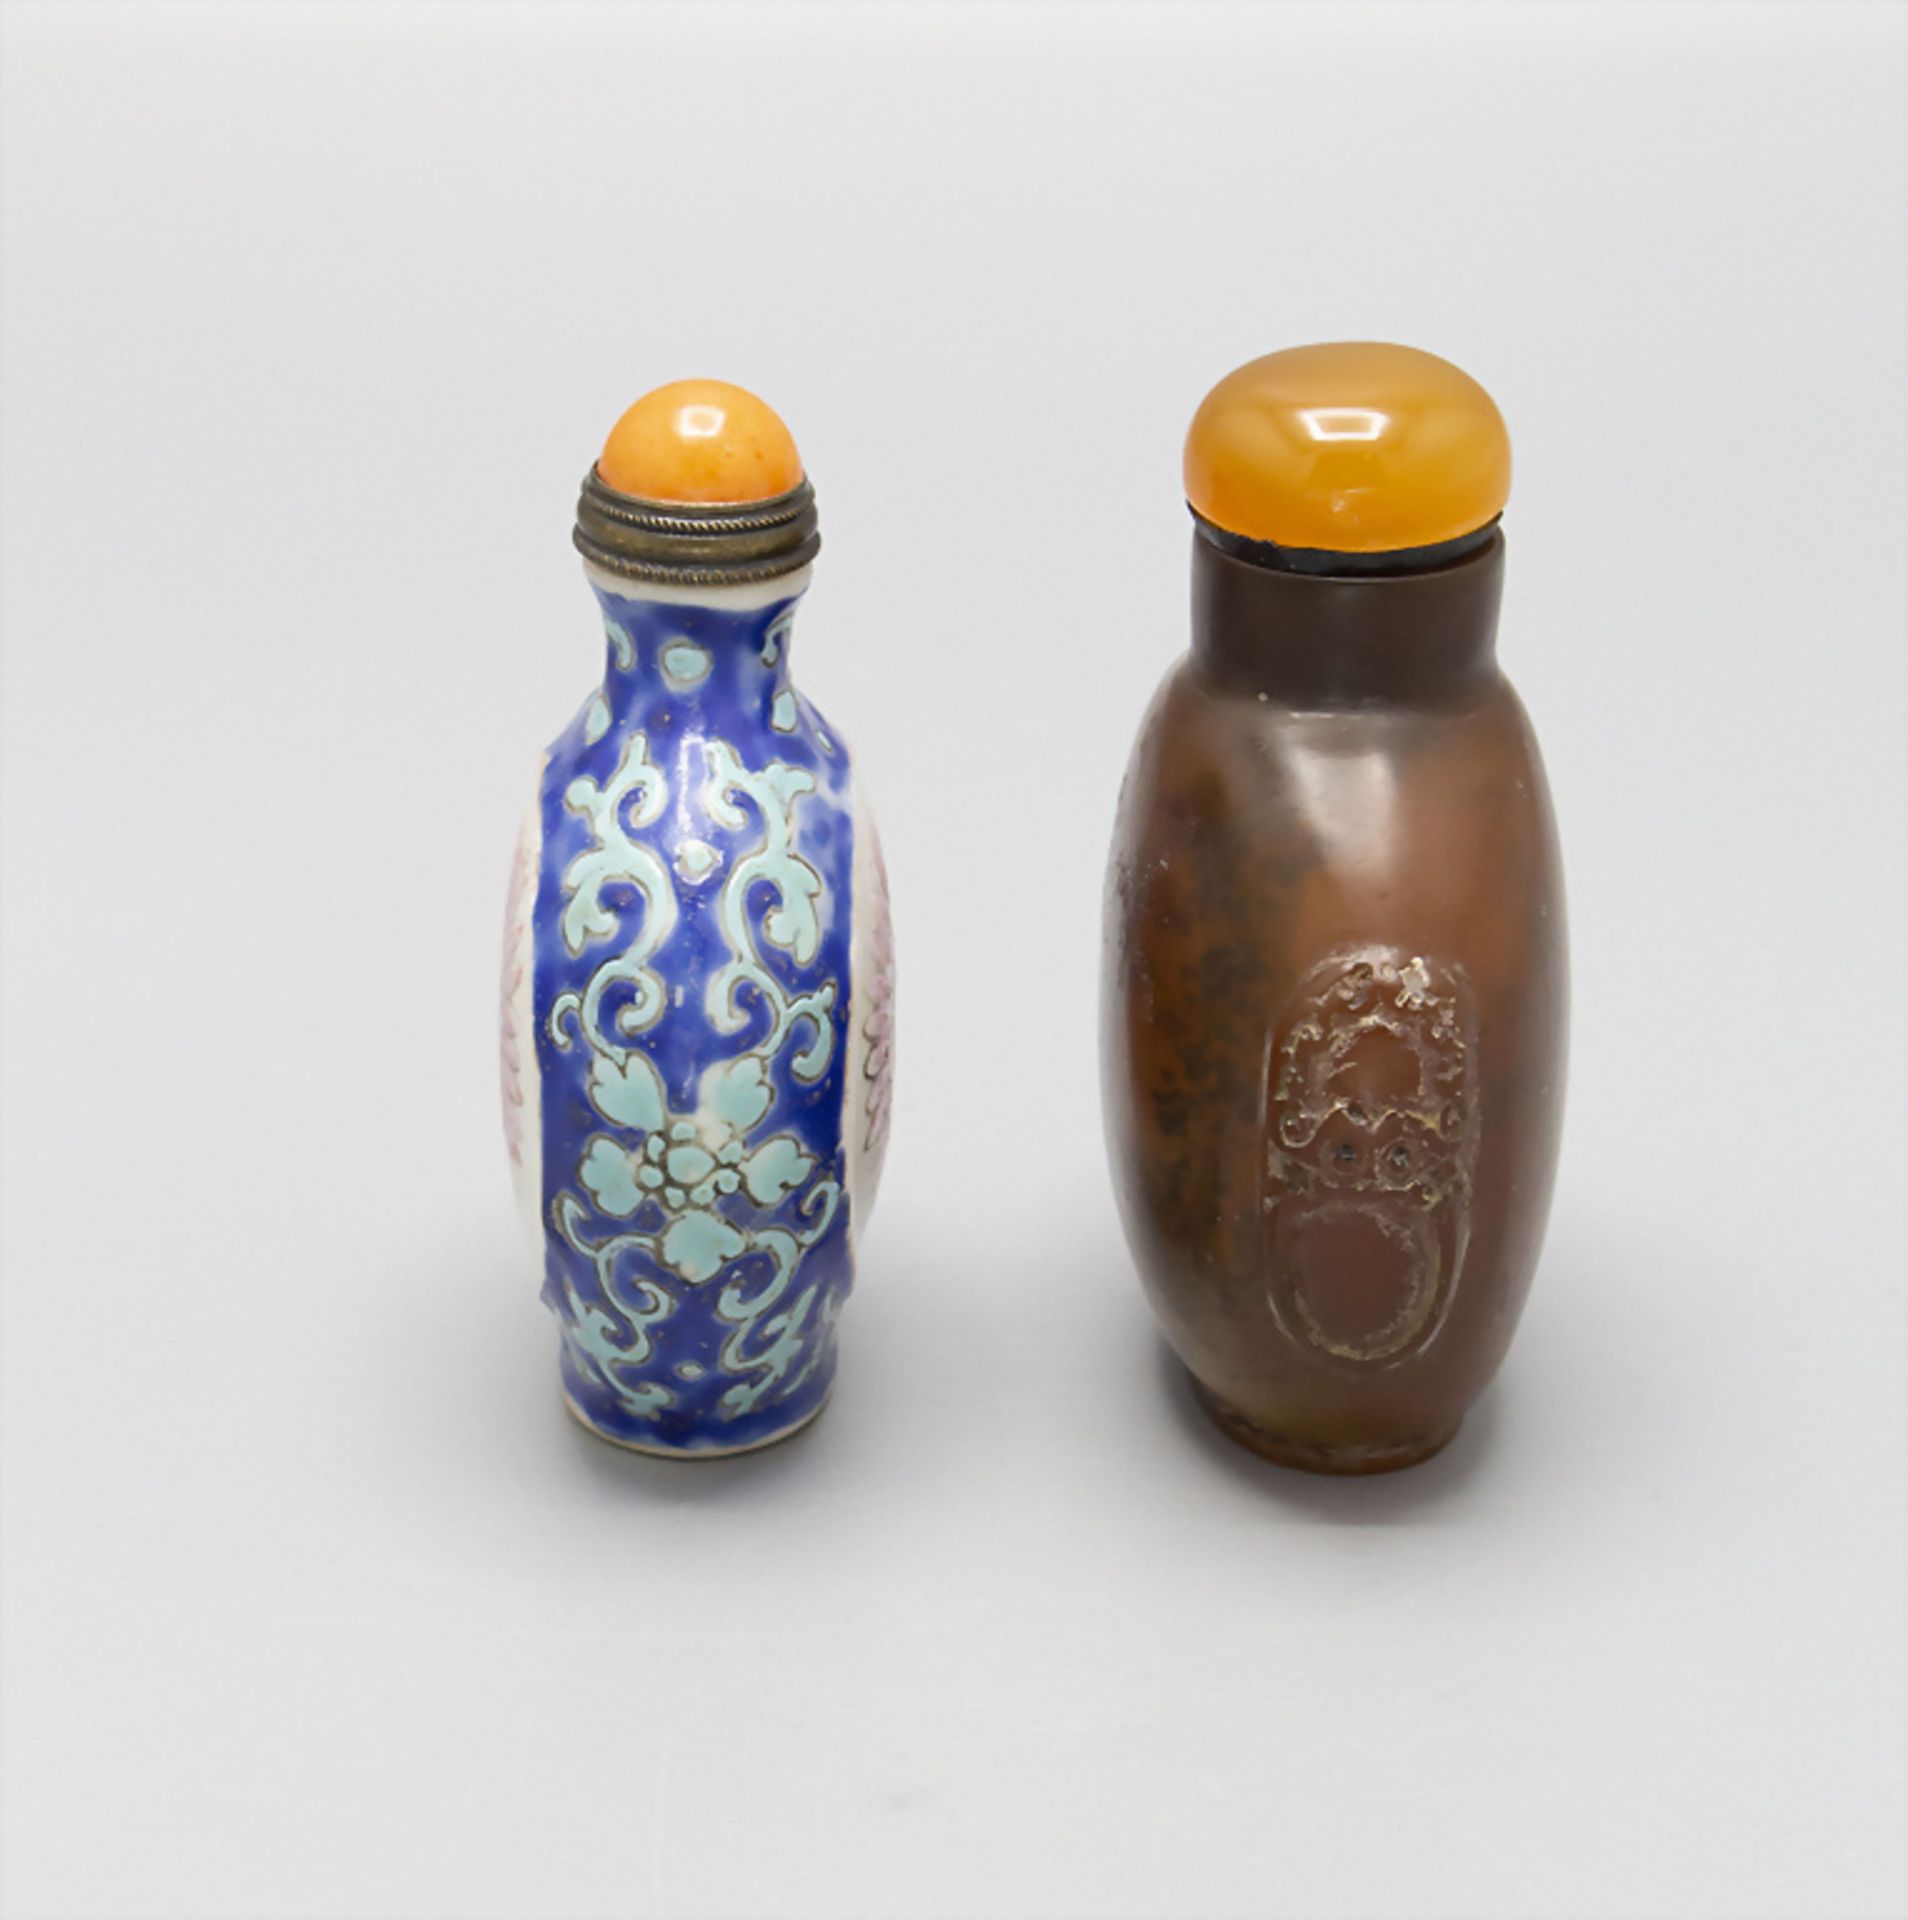 Zwei Schnupftabak Fläschchen / Two snuff bottles, China, Qing-Zeit, 19.-20. Jh. - Image 2 of 4